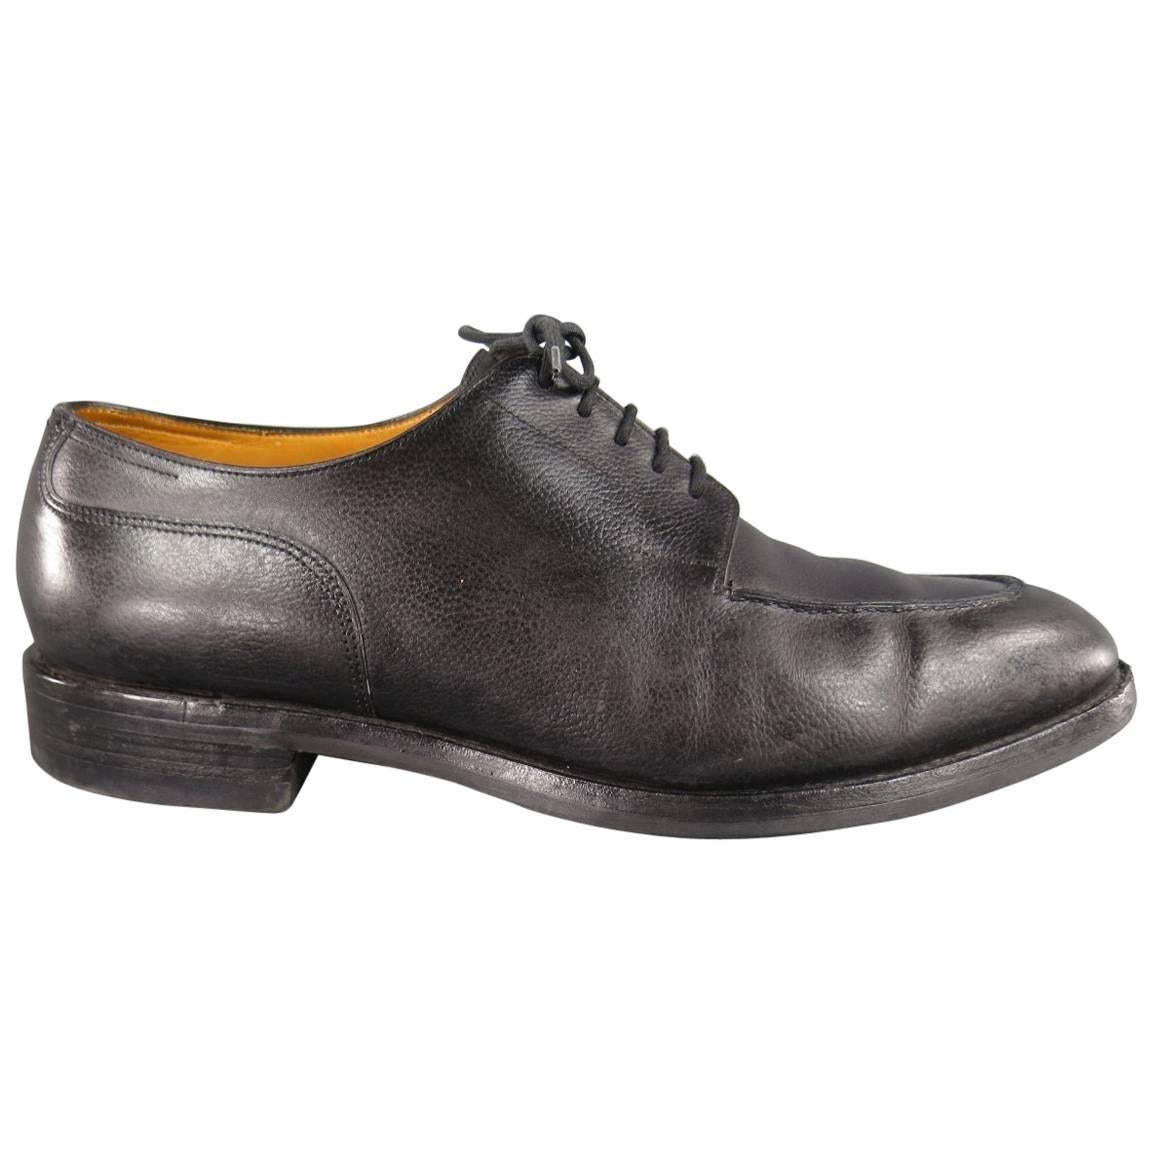 John Lobb Chambord Black Leather Top Stitch Lace Up Dress Shoes, Size 10.5 